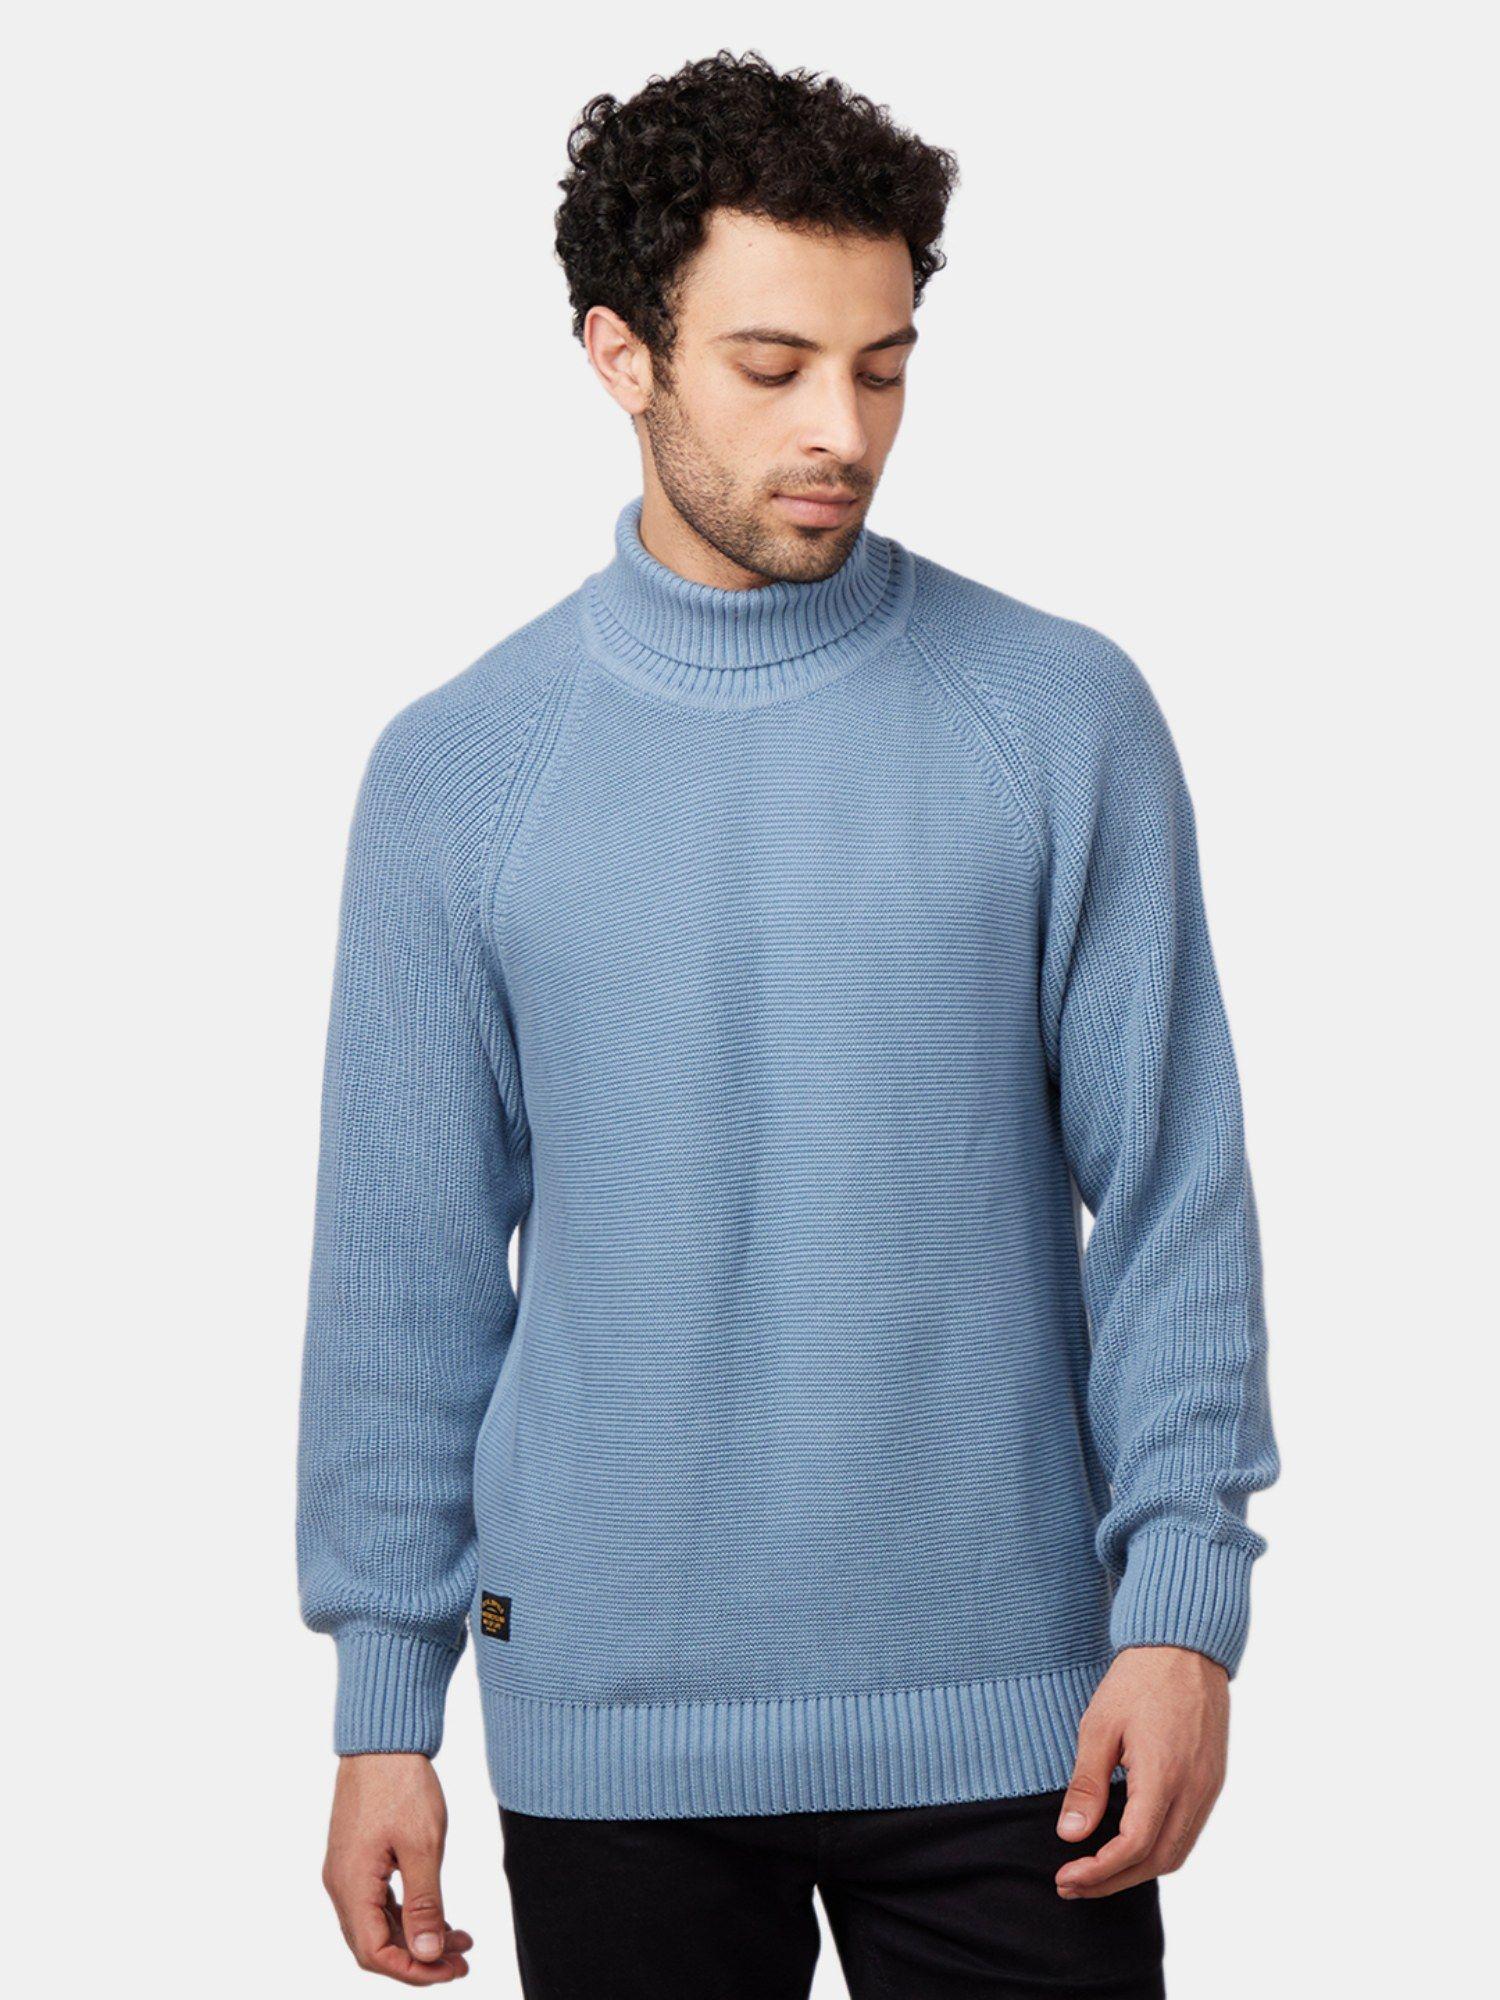 turtleneck blue sweater